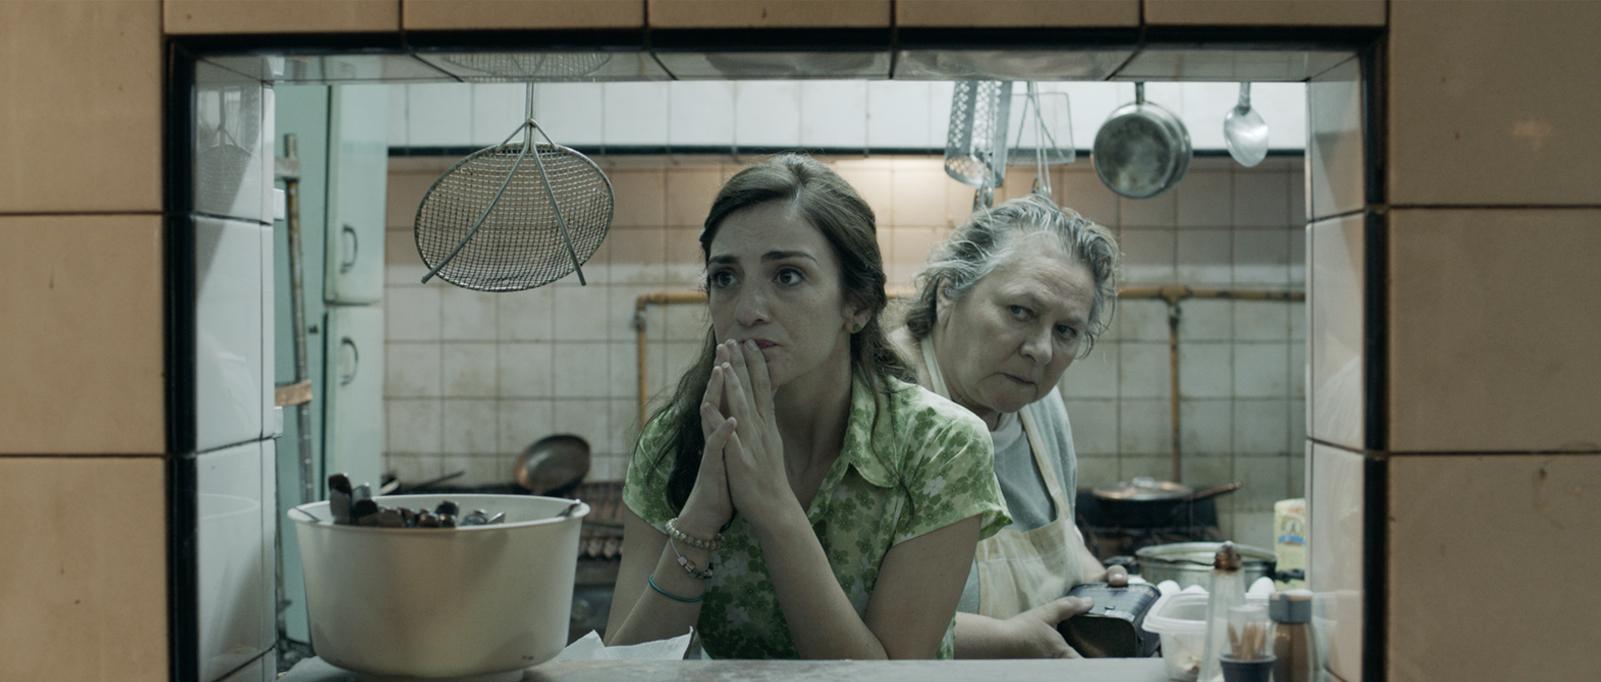 Still of Rita Cortese and Julieta Zylberberg in Relatos salvajes (2014)